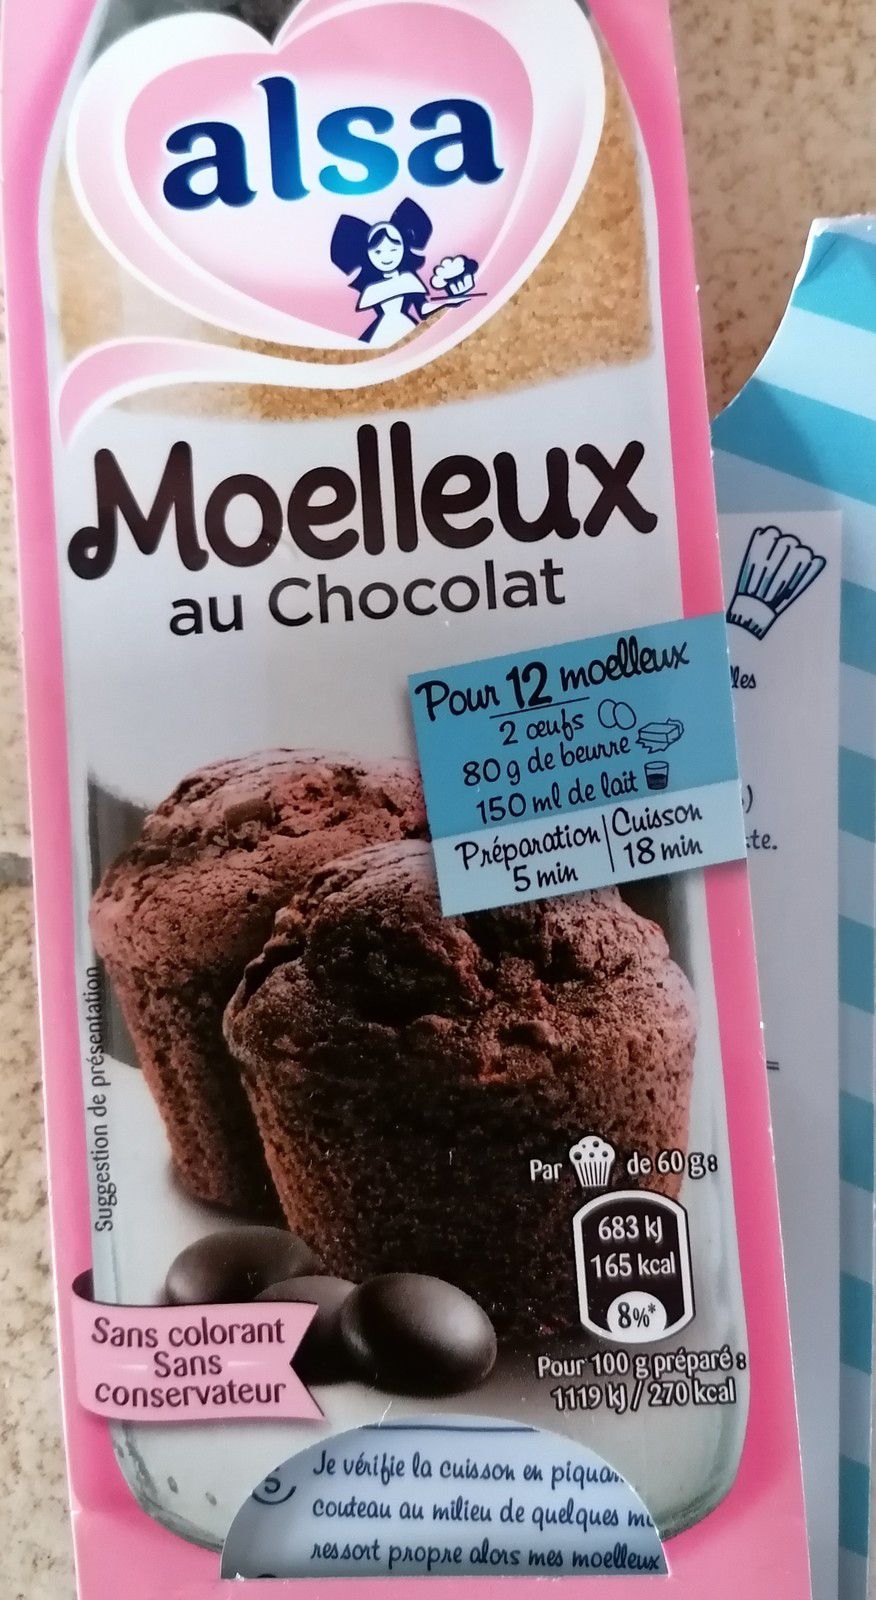 Moelleux au Chocolat alsa - THE WORLD OF ZAZA